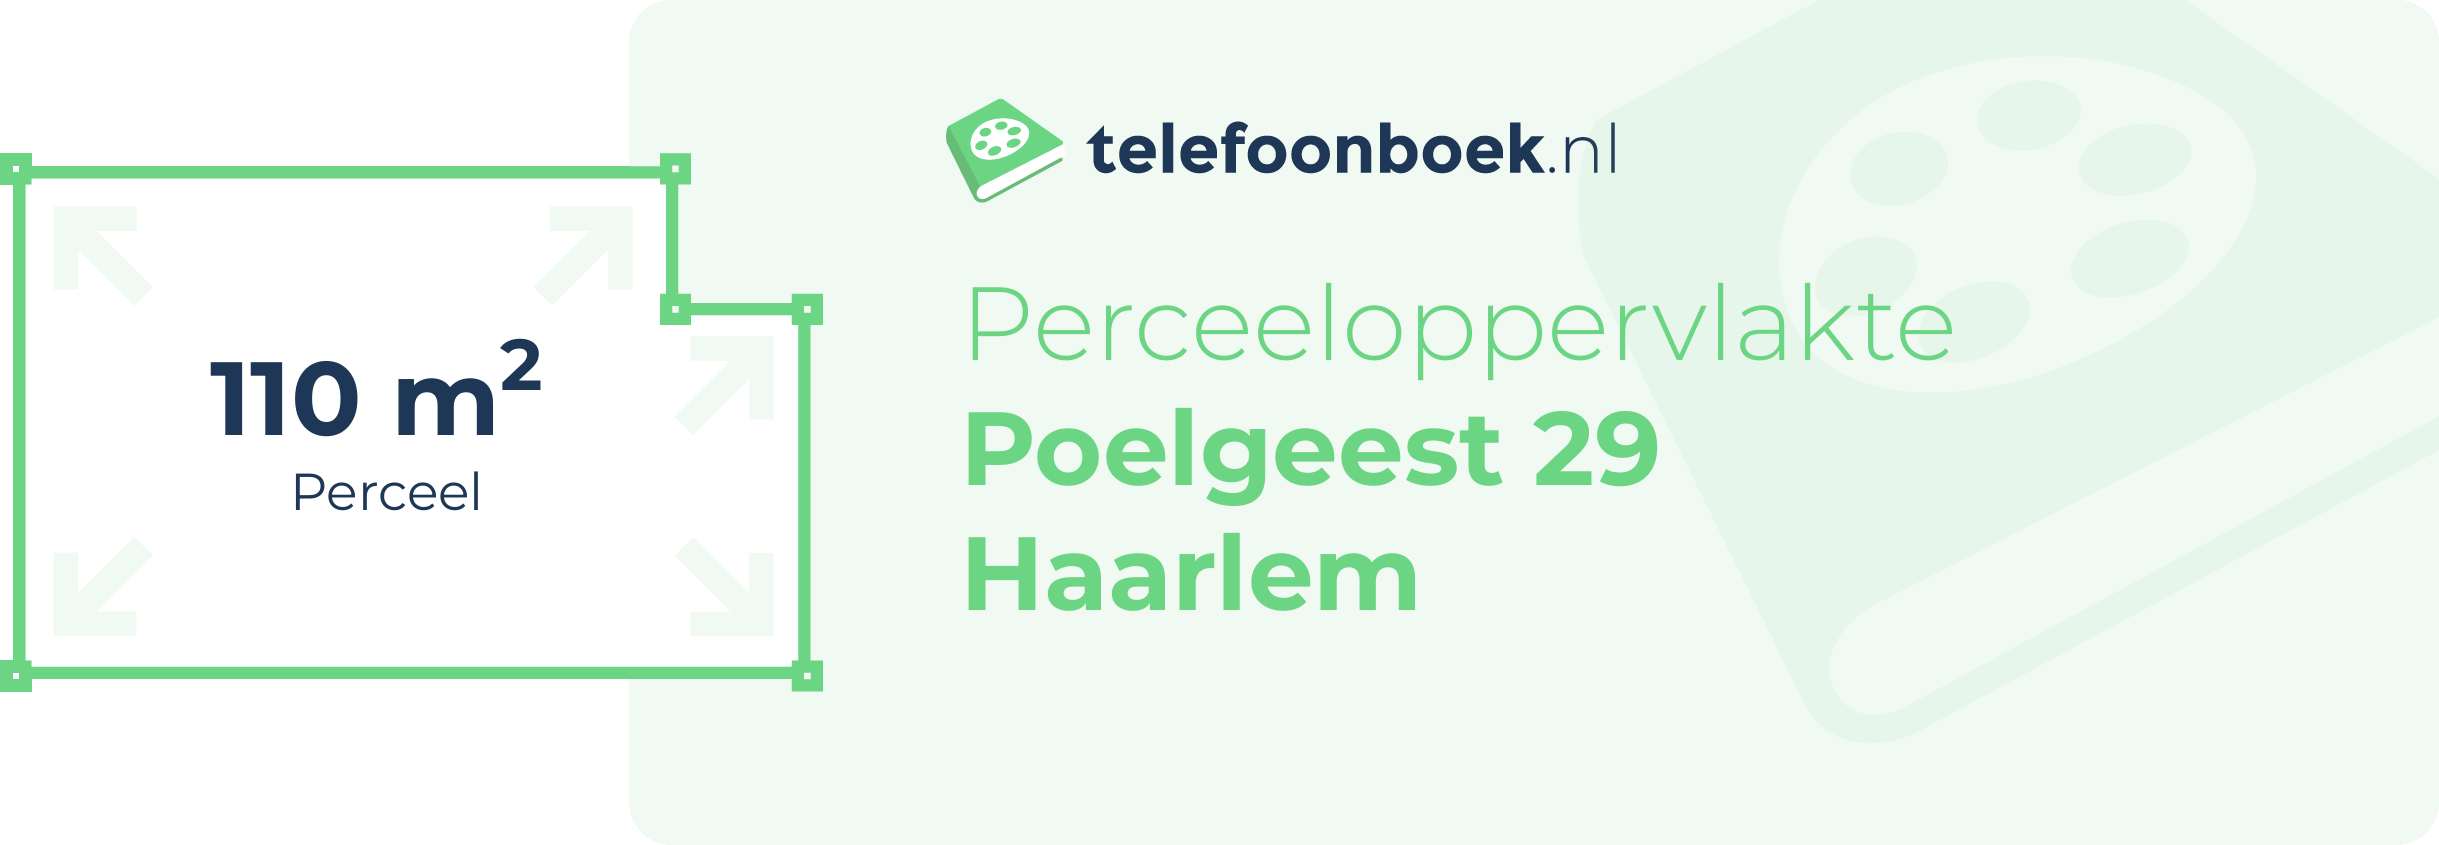 Perceeloppervlakte Poelgeest 29 Haarlem